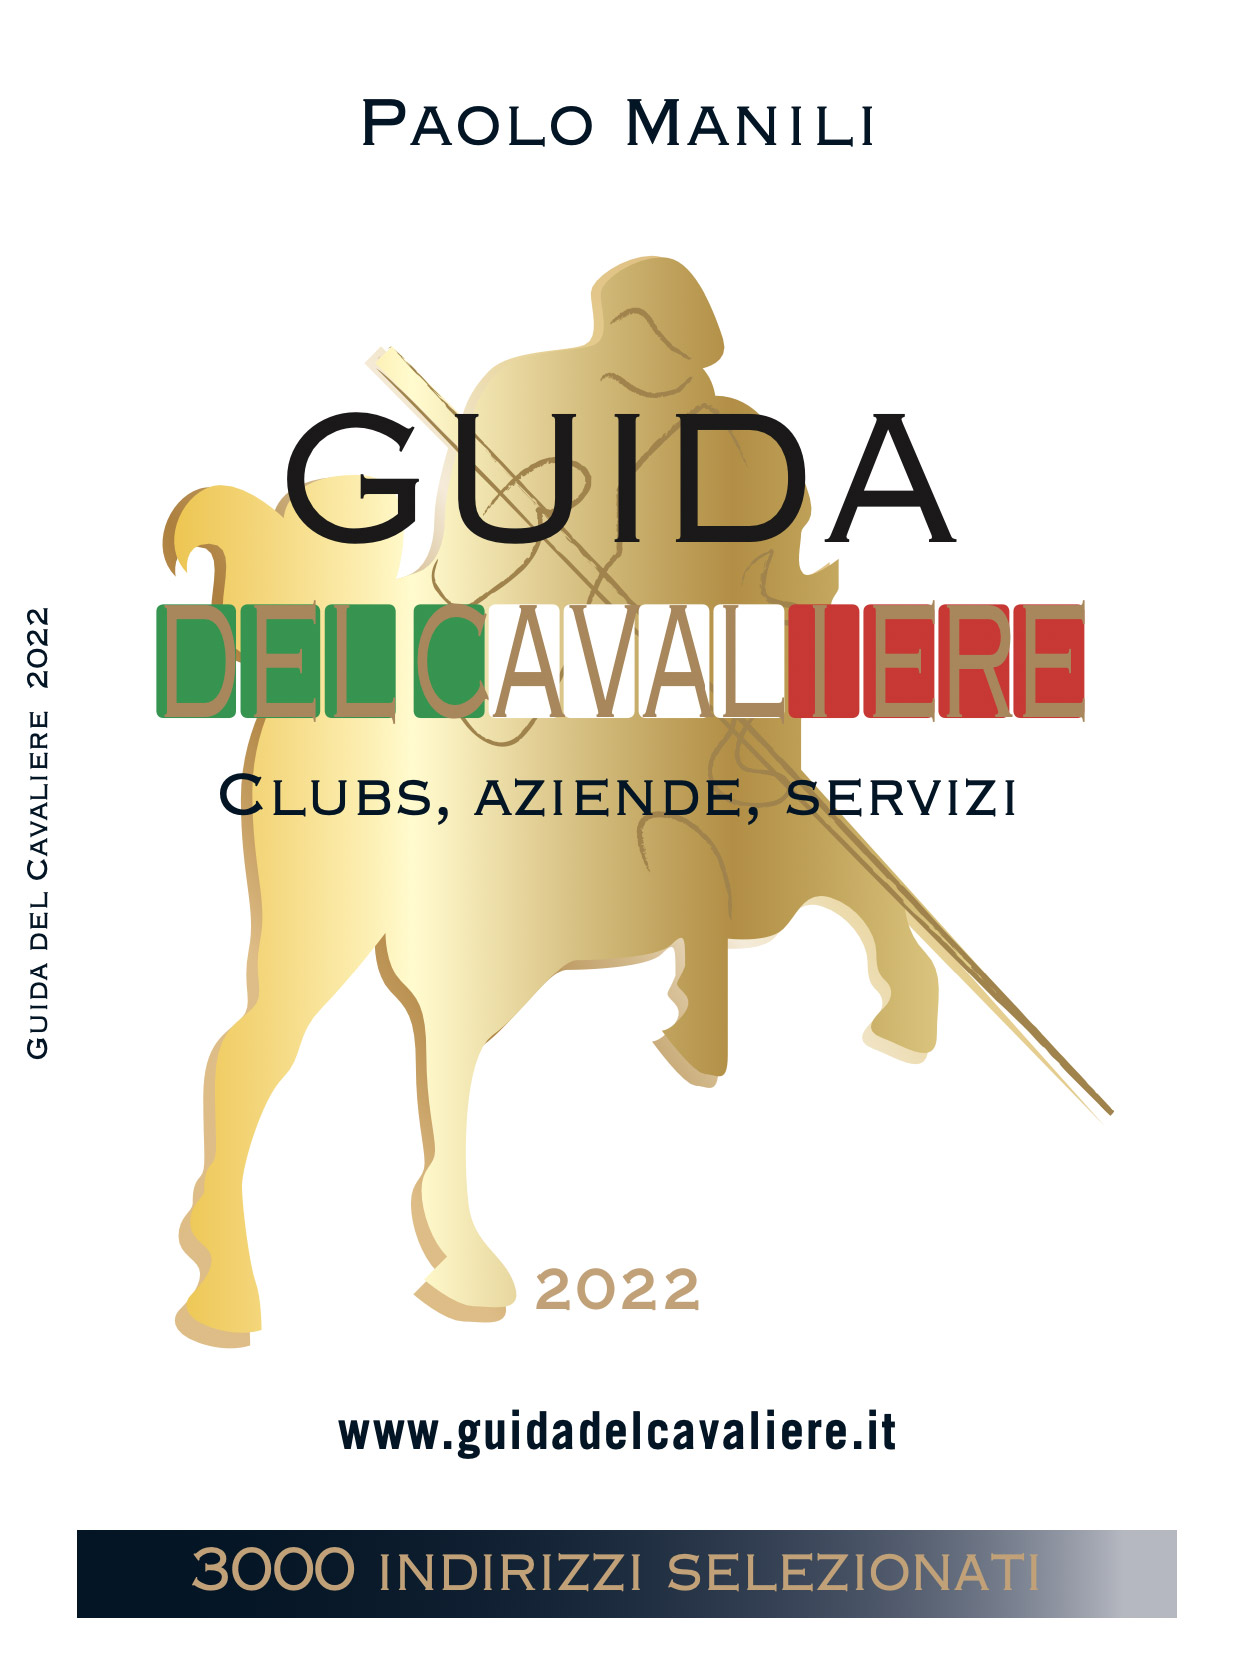 (c) Guidadelcavaliere.it